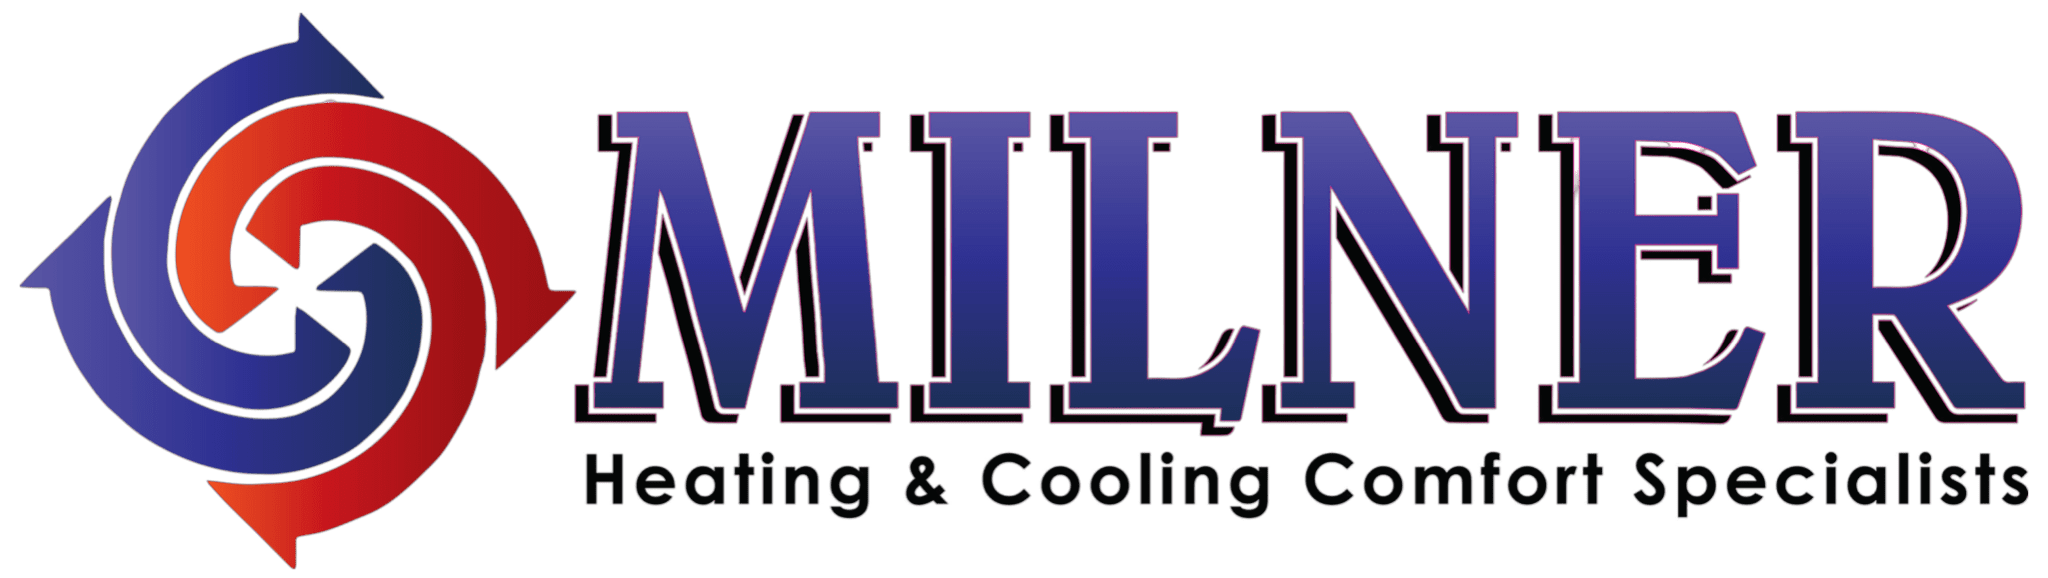 Milner AC Logo - transparent